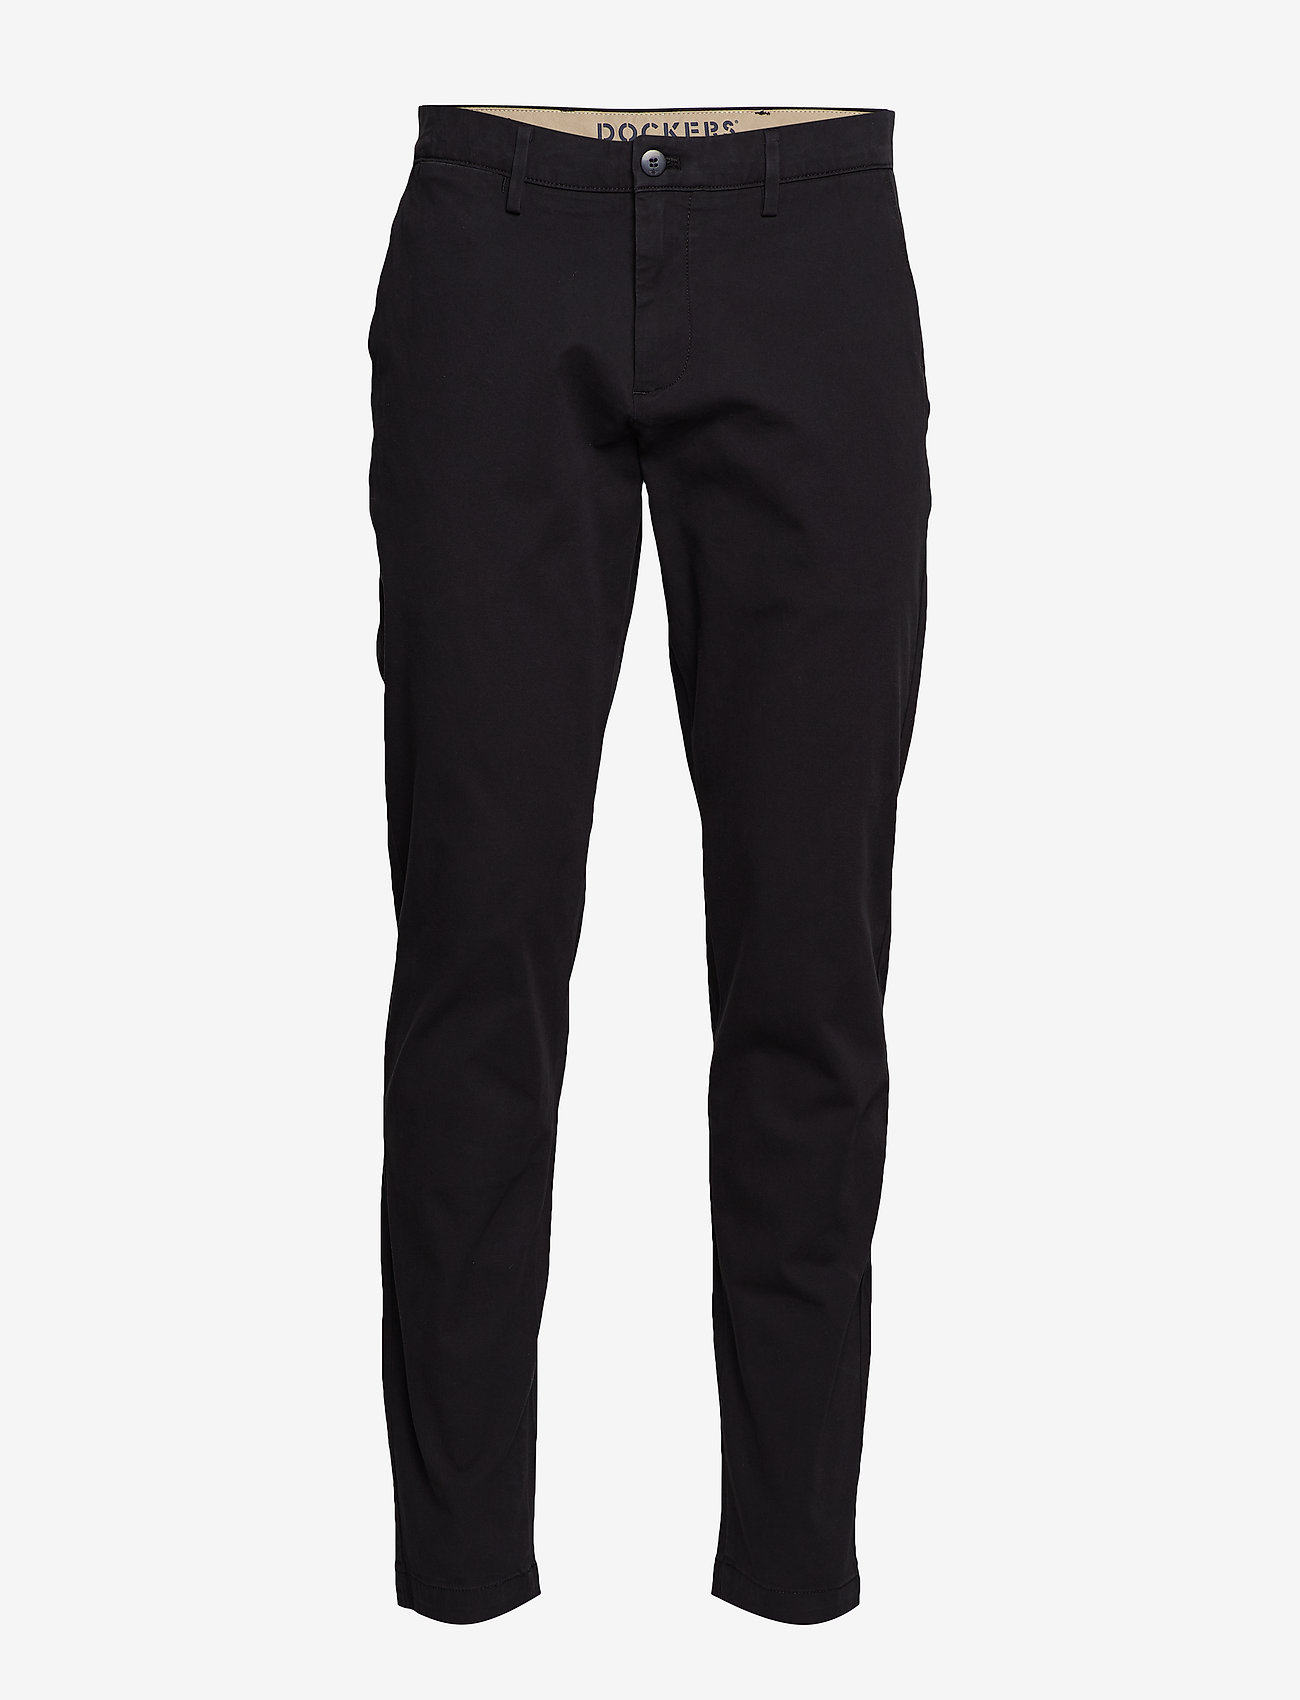 Dockers - MOTION CHINO TAPER - kostiumo kelnės - blacks - 0